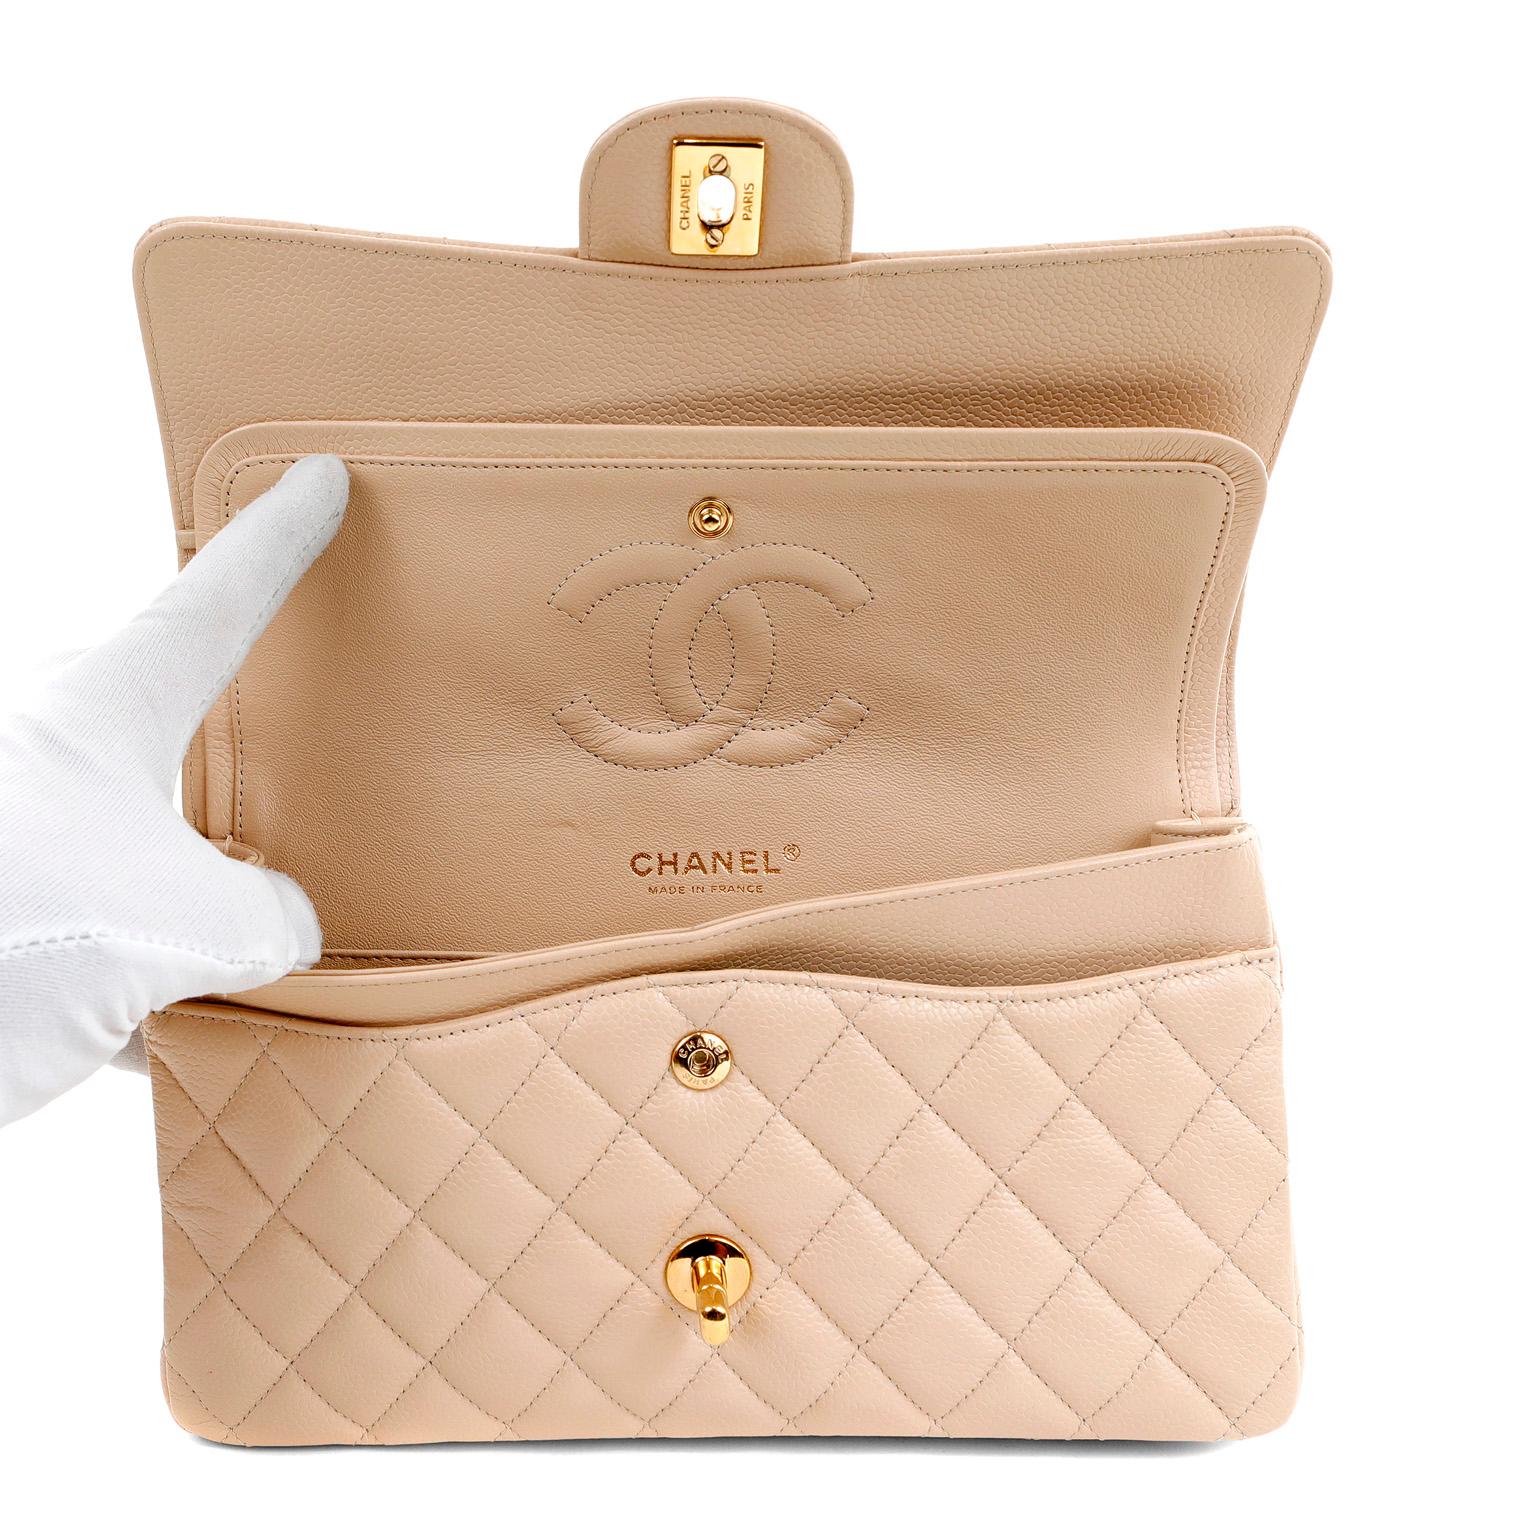 Chanel Beige Clair Caviar Leather Medium Classic Flap Bag 2